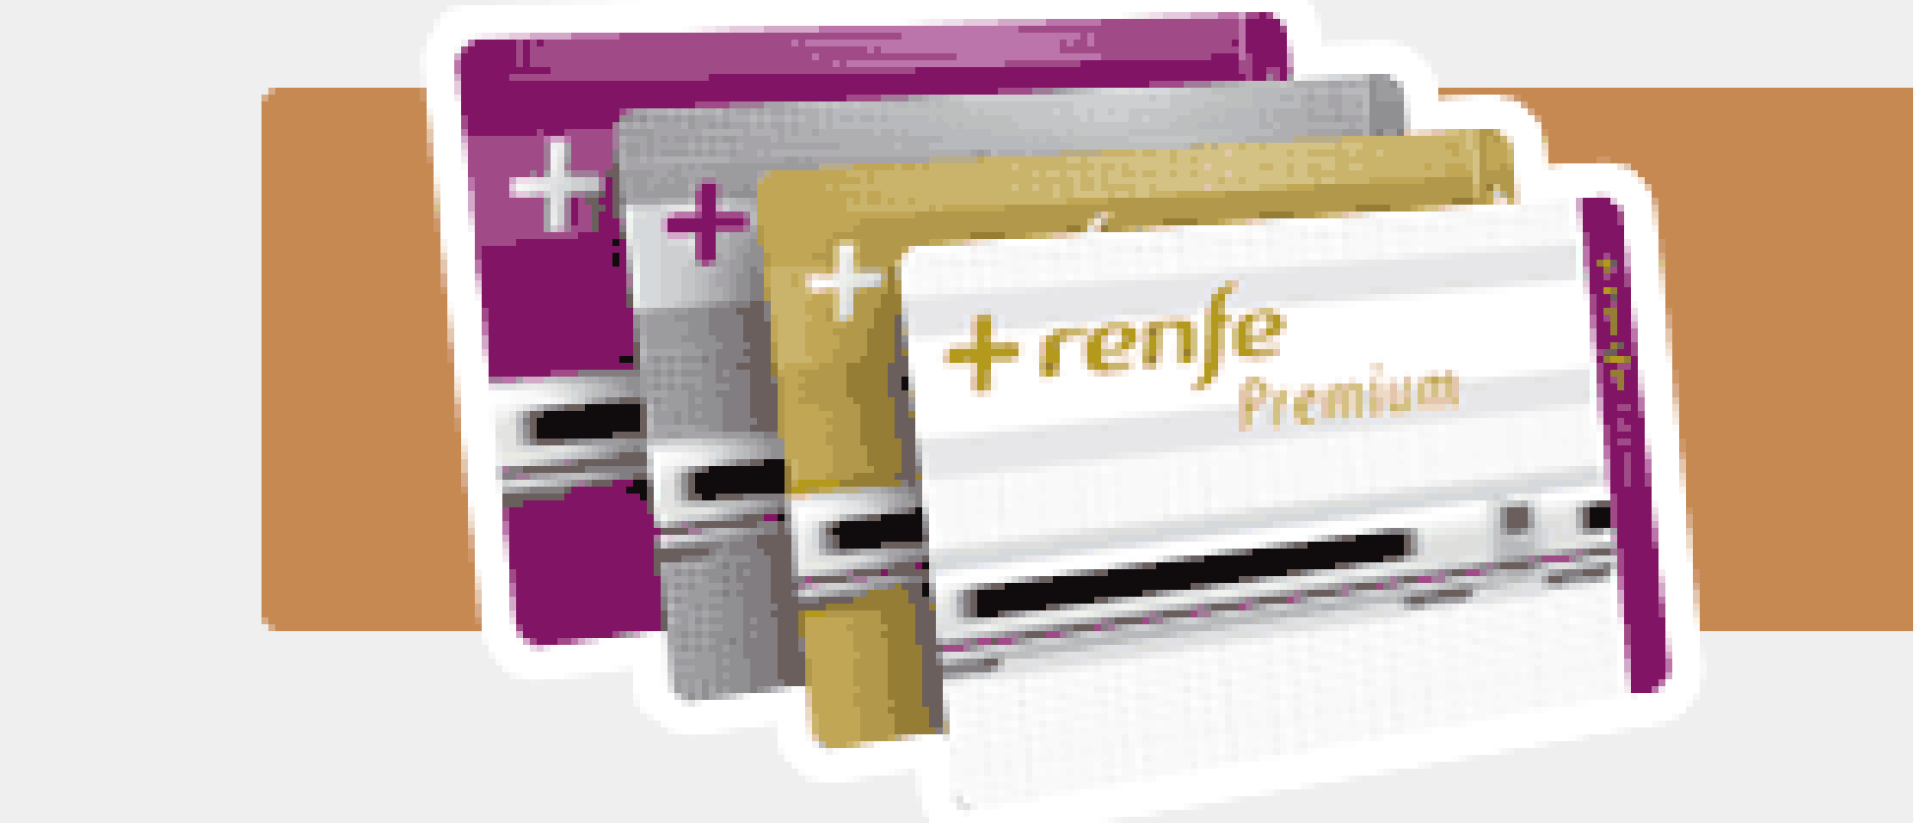 renfe travel card